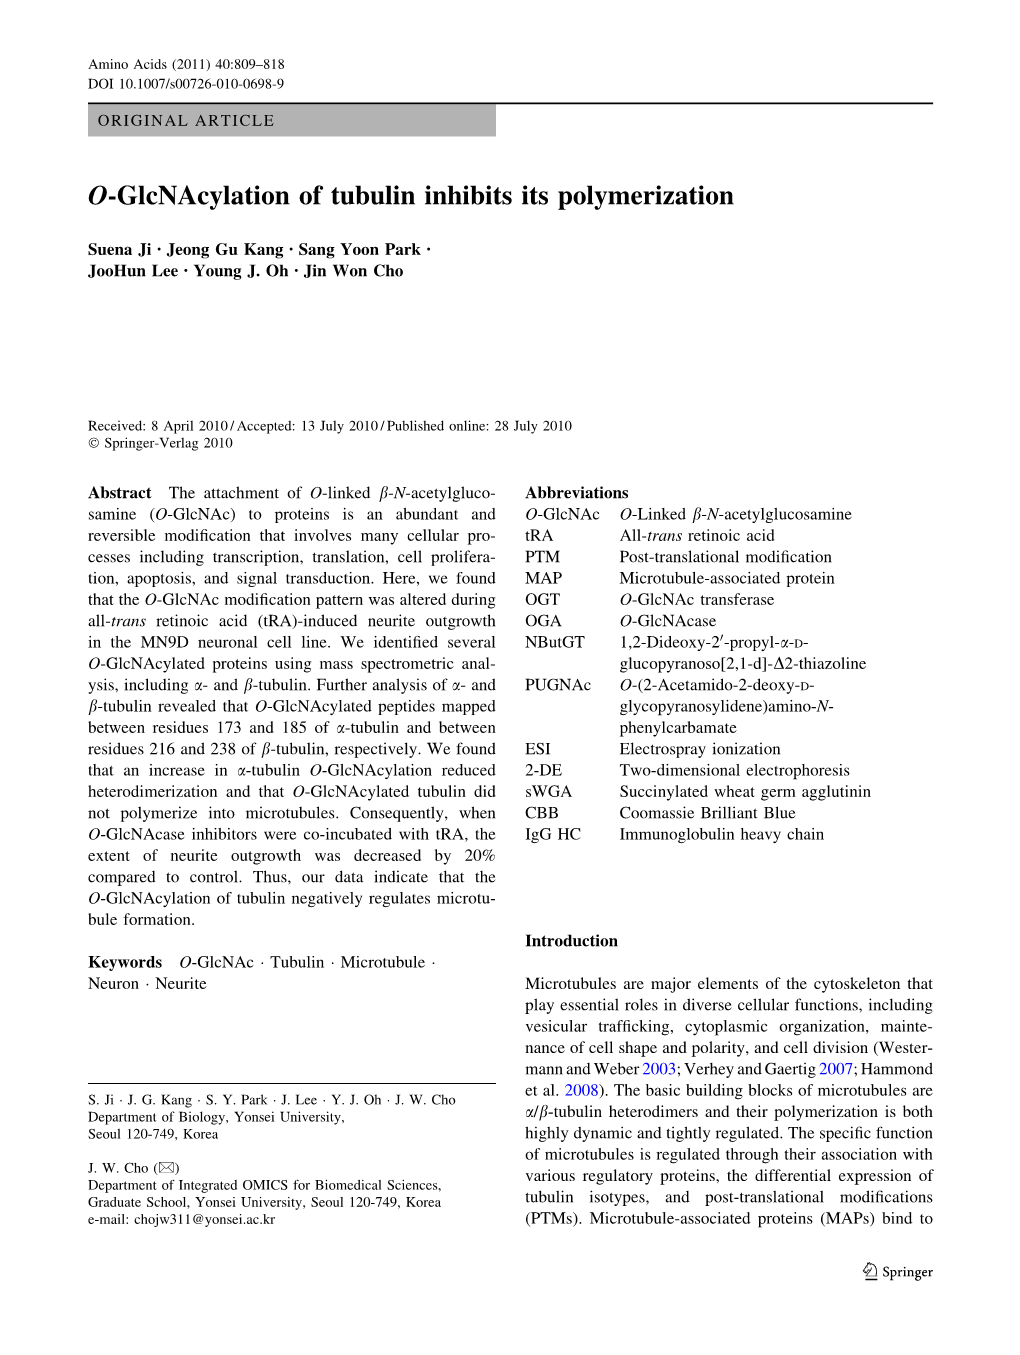 O-Glcnacylation of Tubulin Inhibits Its Polymerization